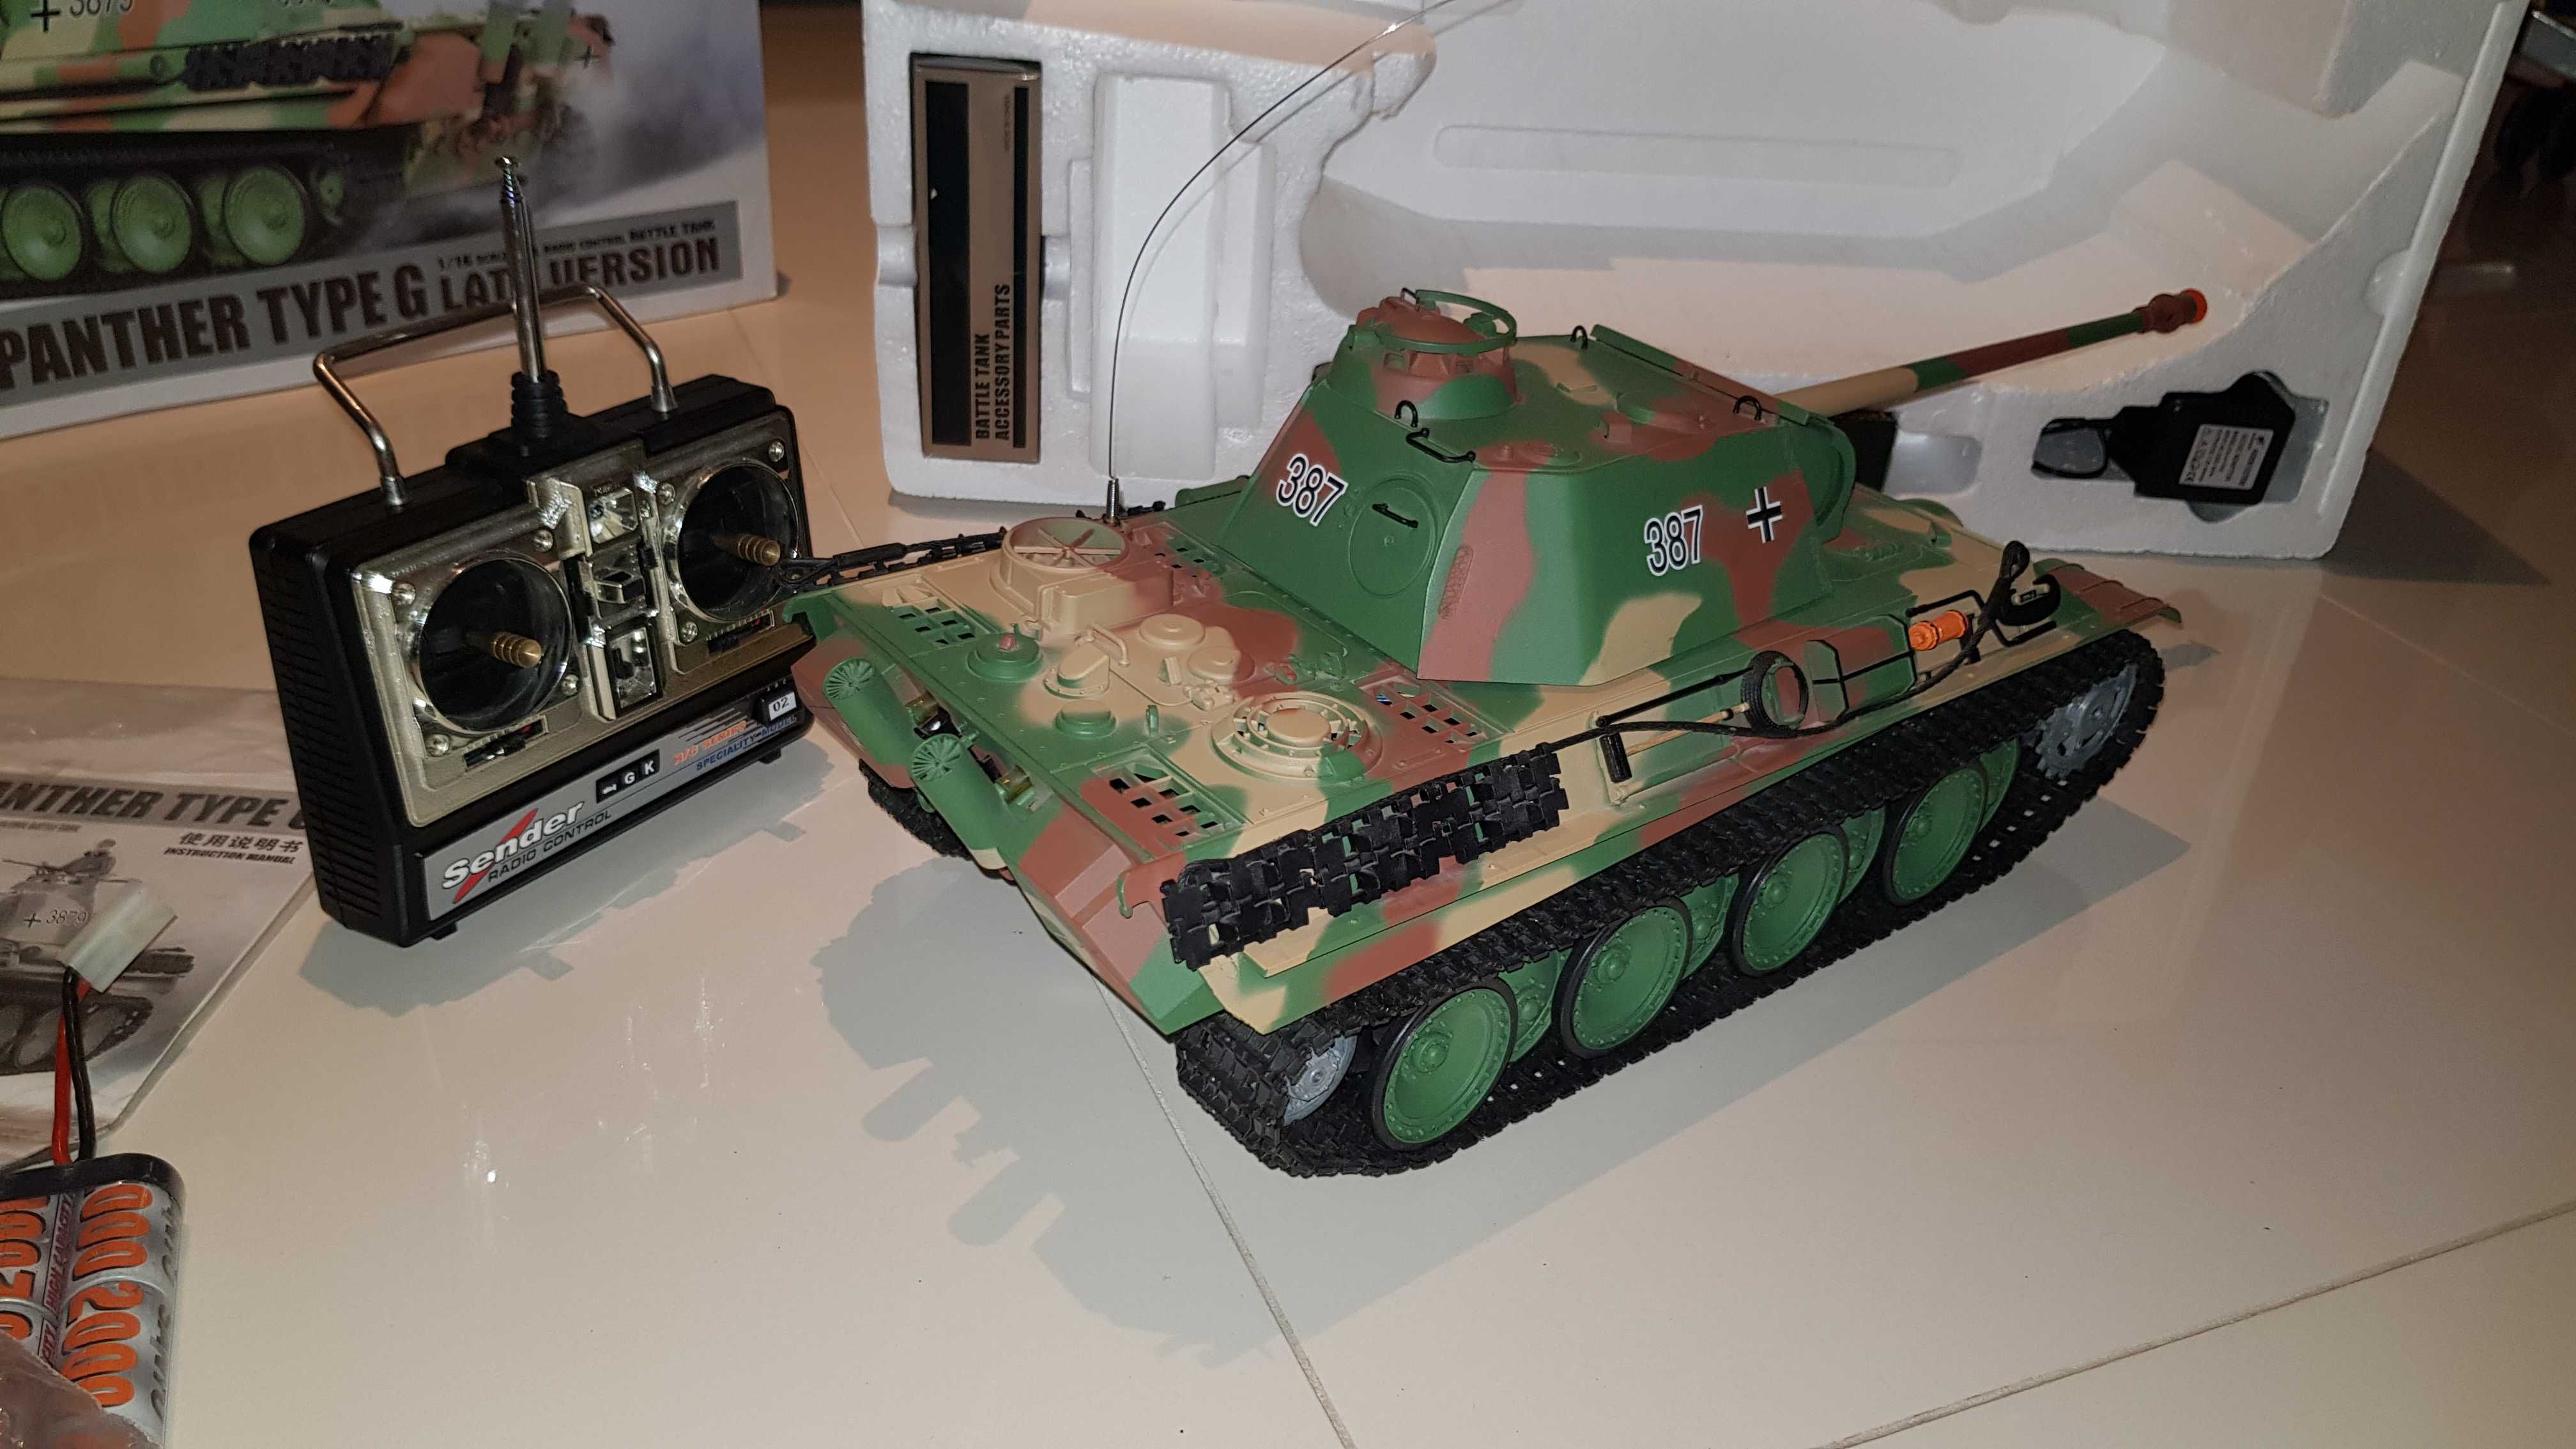 [RC] 1:16 czołg Panther Type G Heng Long [3879] + metalowe części.